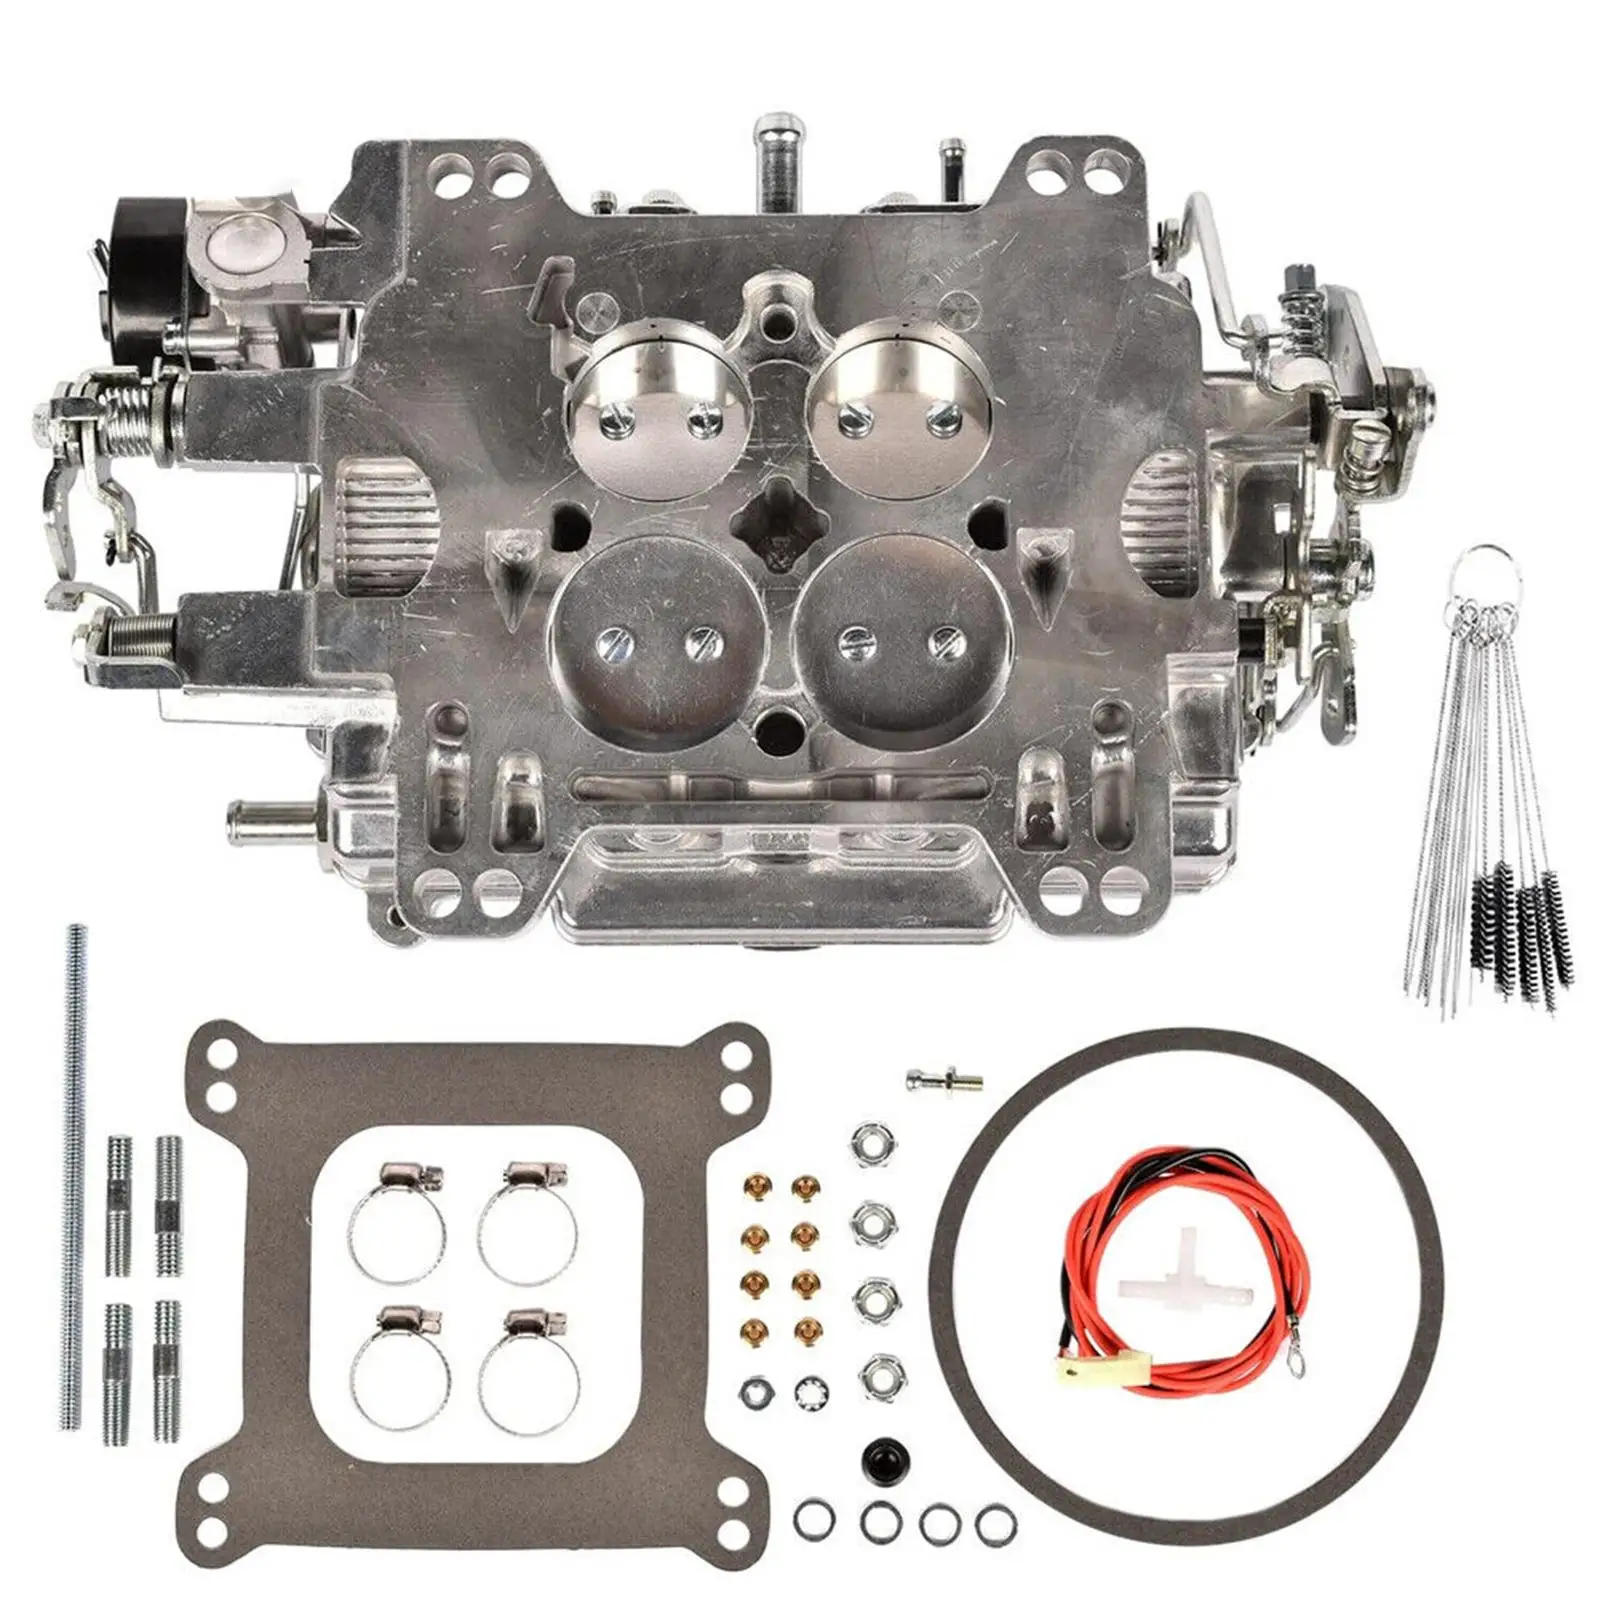 1406 Carburetor High Performance Replace Parts Pickup Truck Carburetor for Performer 600 CFM 4 Barrel with Electric Choke